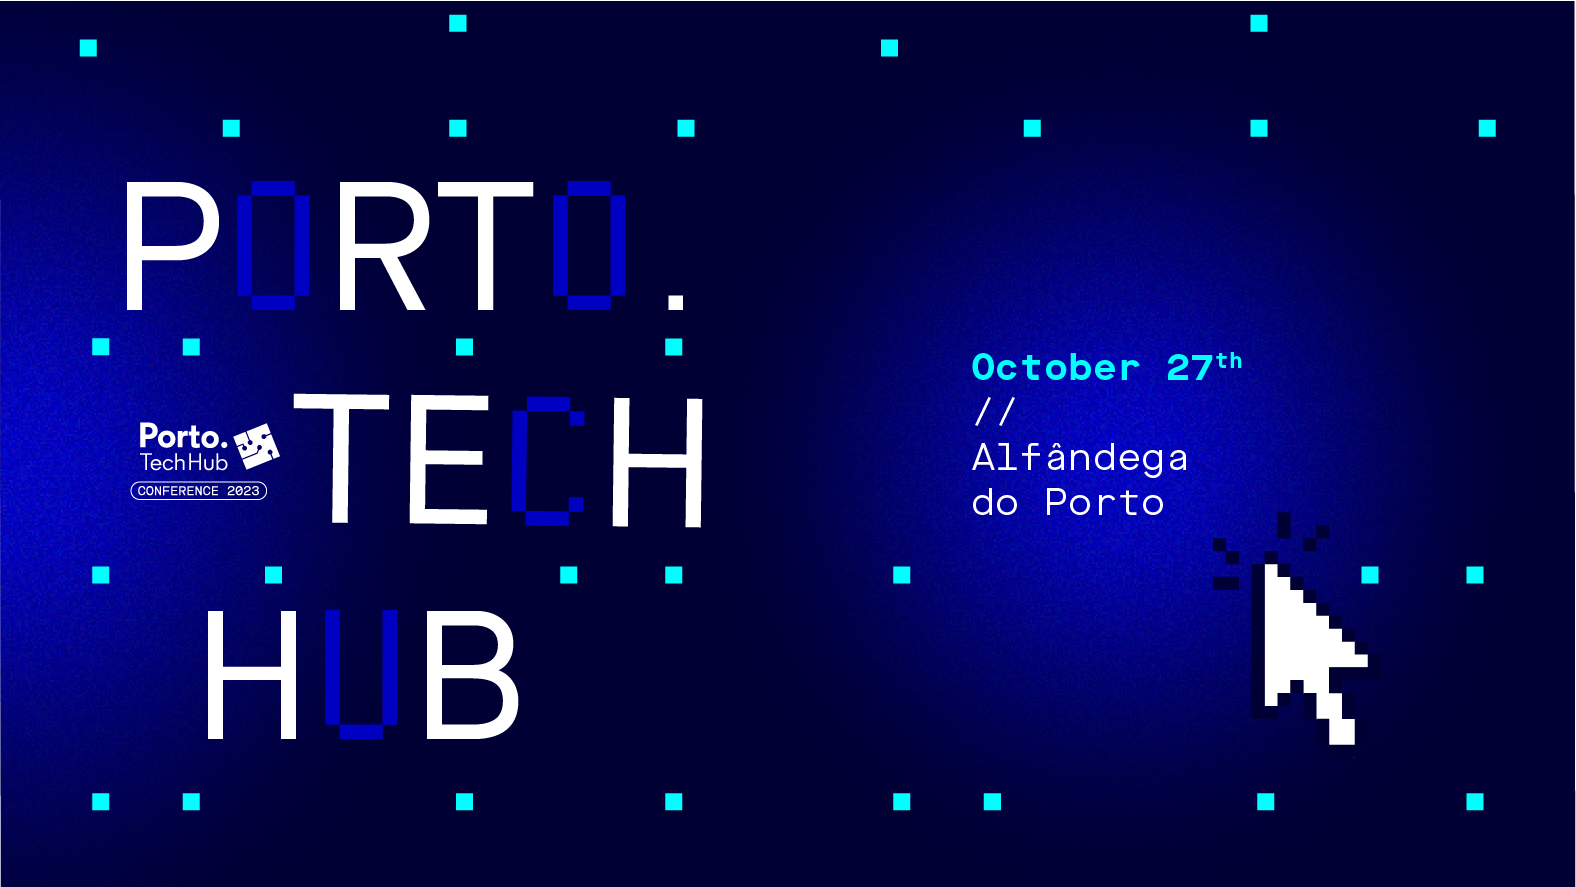 The Porto Tech Hub Conference 2023 is right around the corner